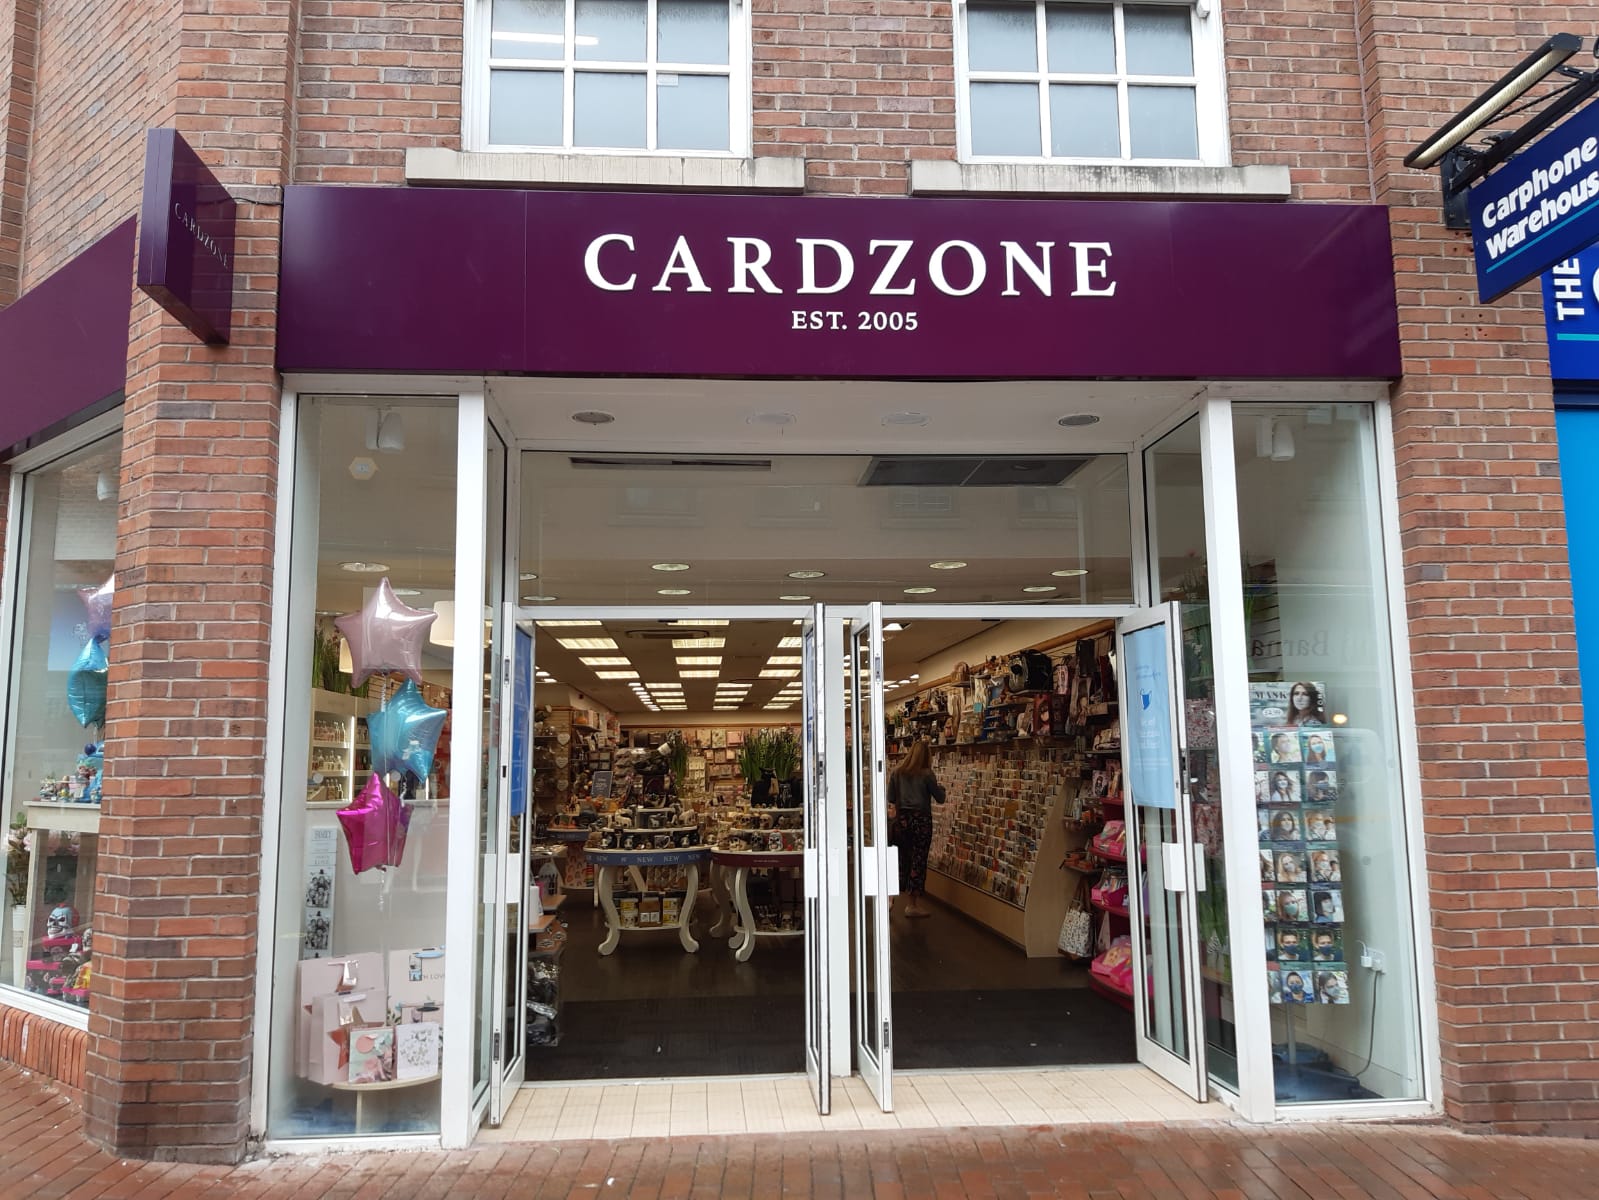 Above: Cardzone’s new branding on its new Macclesfield store.